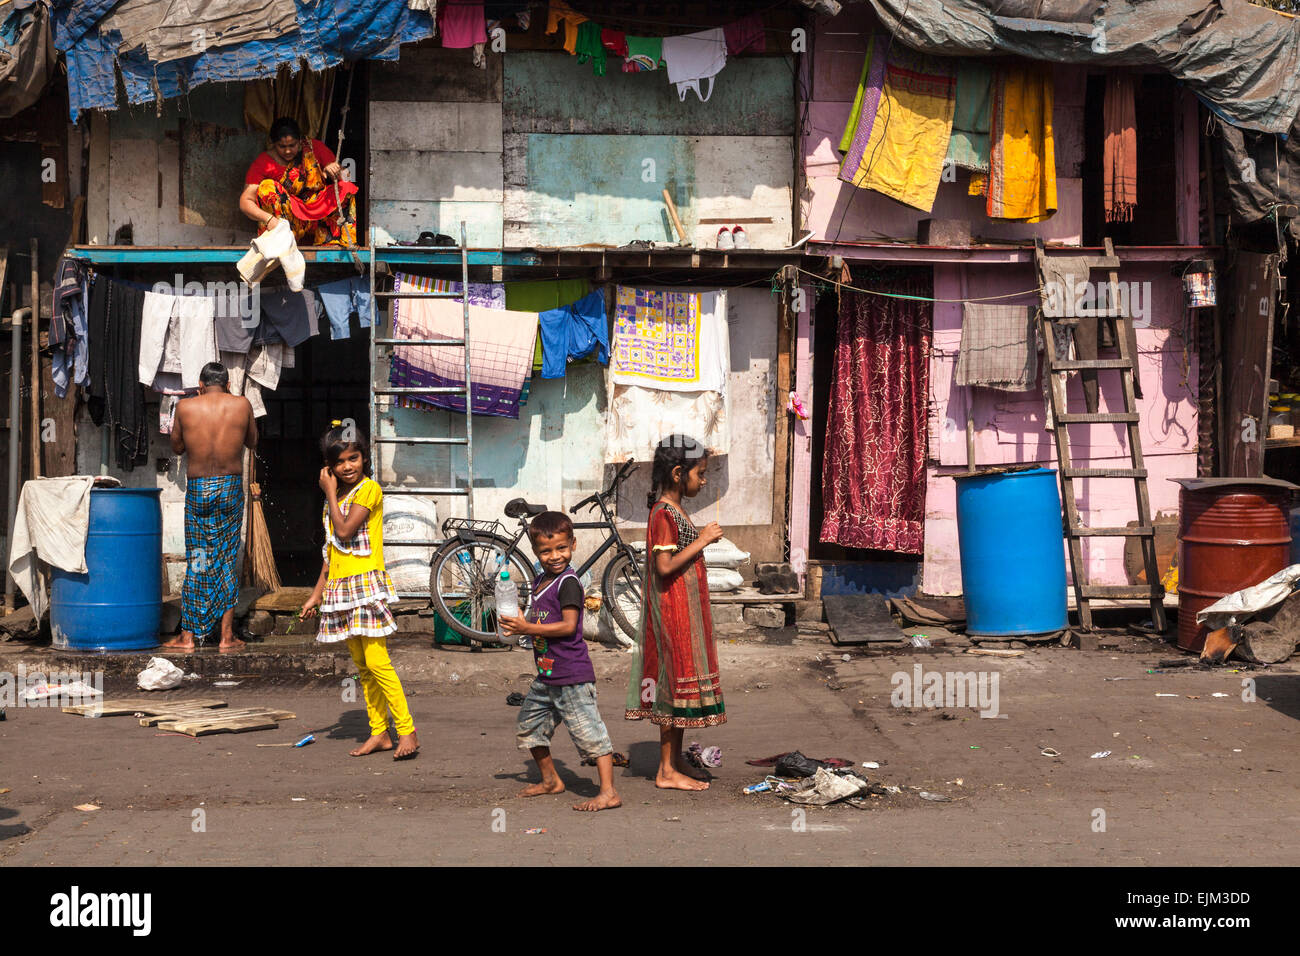 shack in Mumbai, India Stock Photo